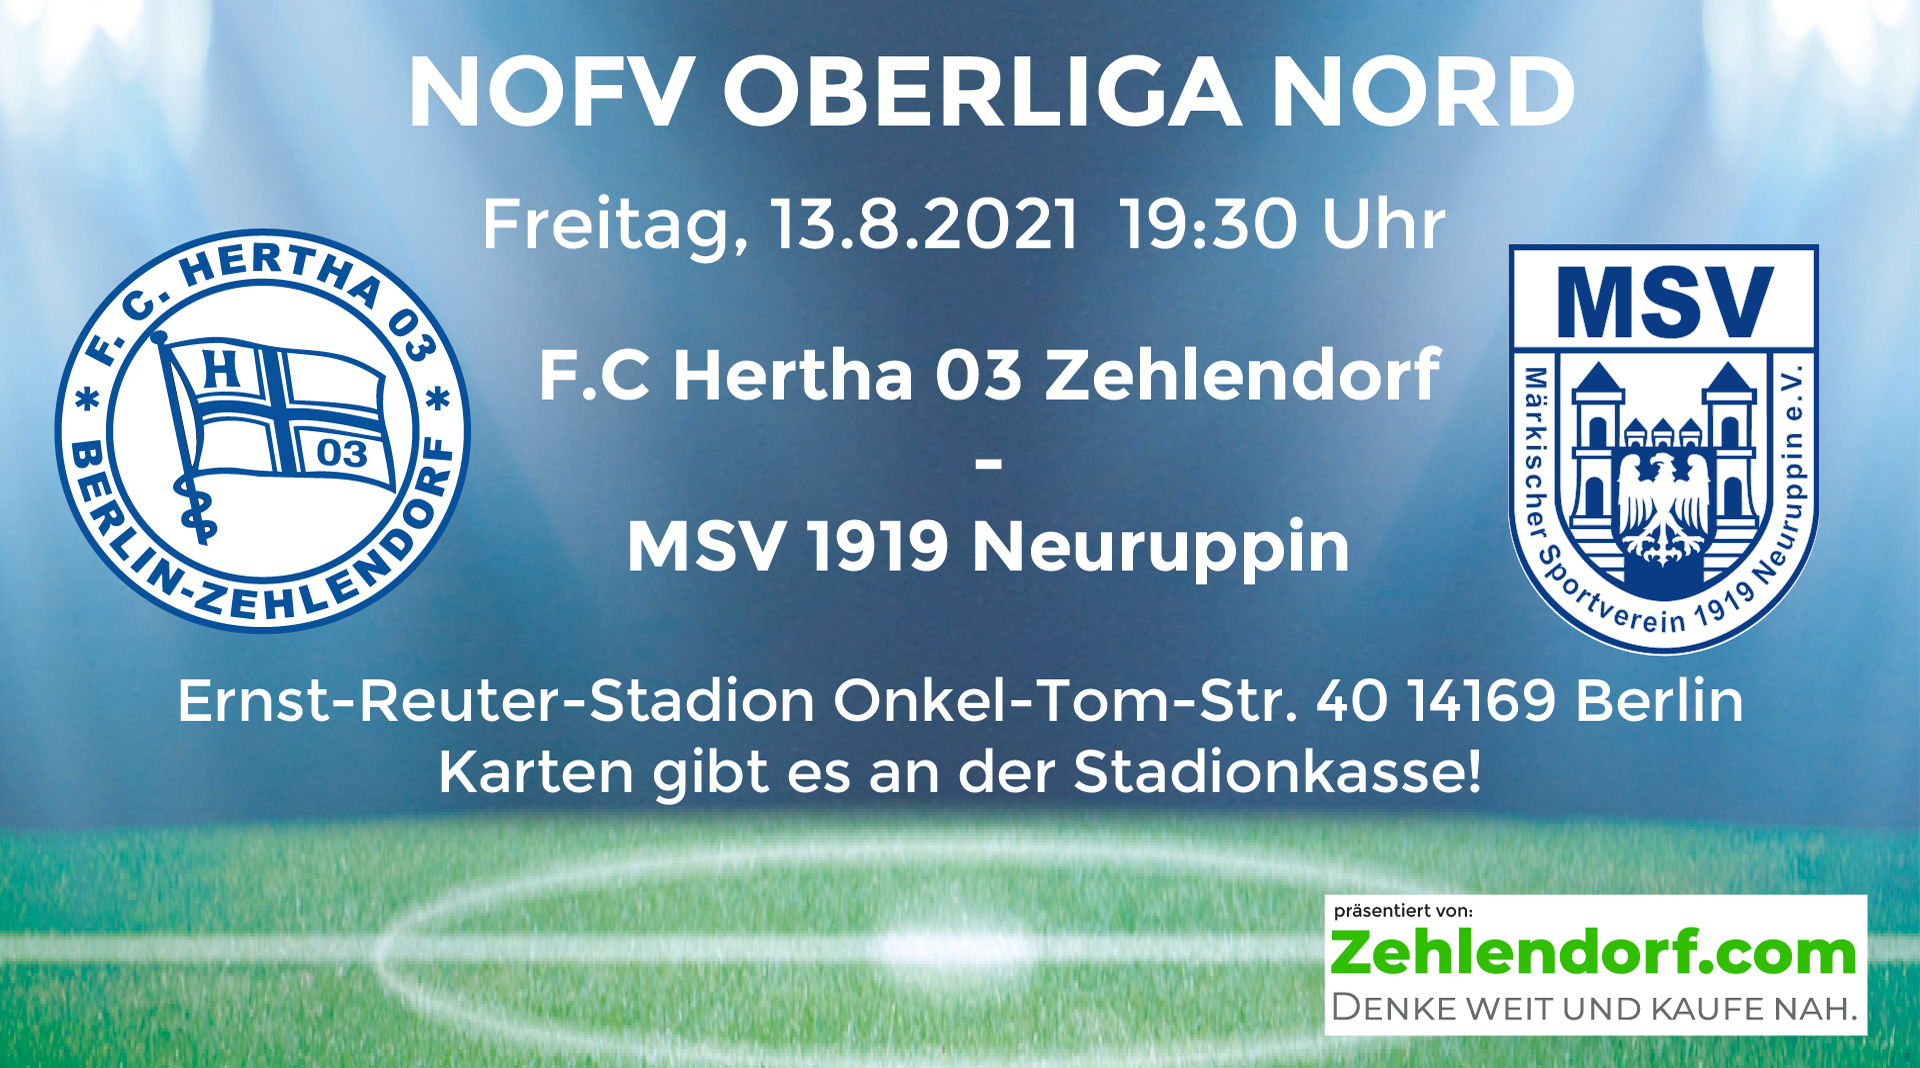 F.C. Hertha 03 Zehlendorf vs. MSV 1919 Neuruppin am 13.8.2021